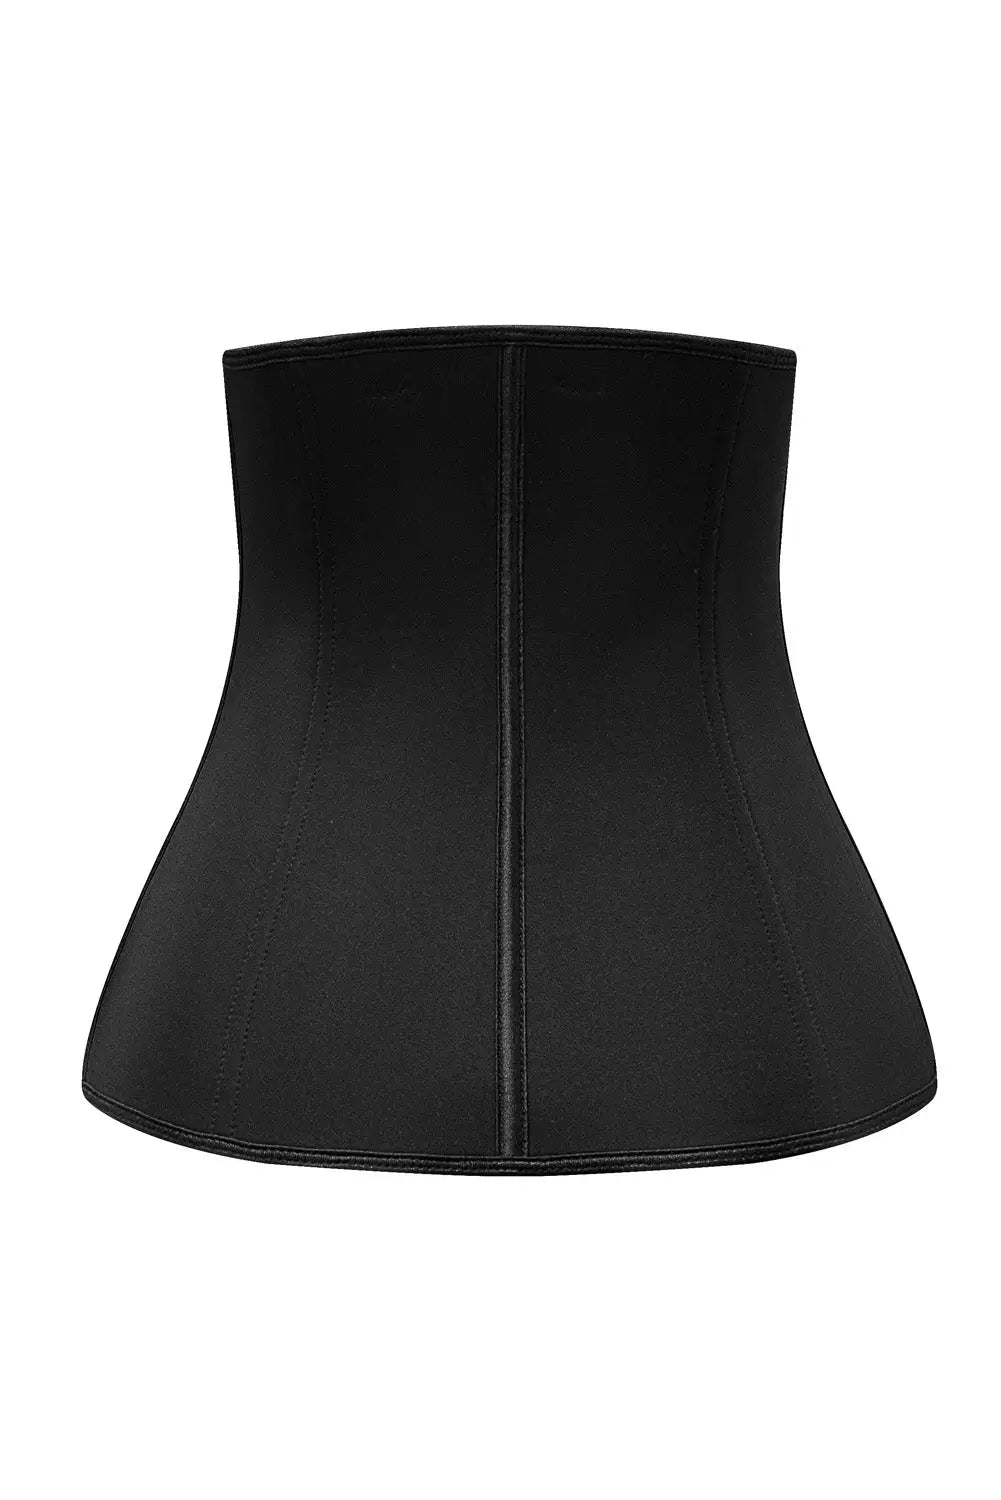 Black zipper body shaper slimming waist trainer - corsets & bustiers